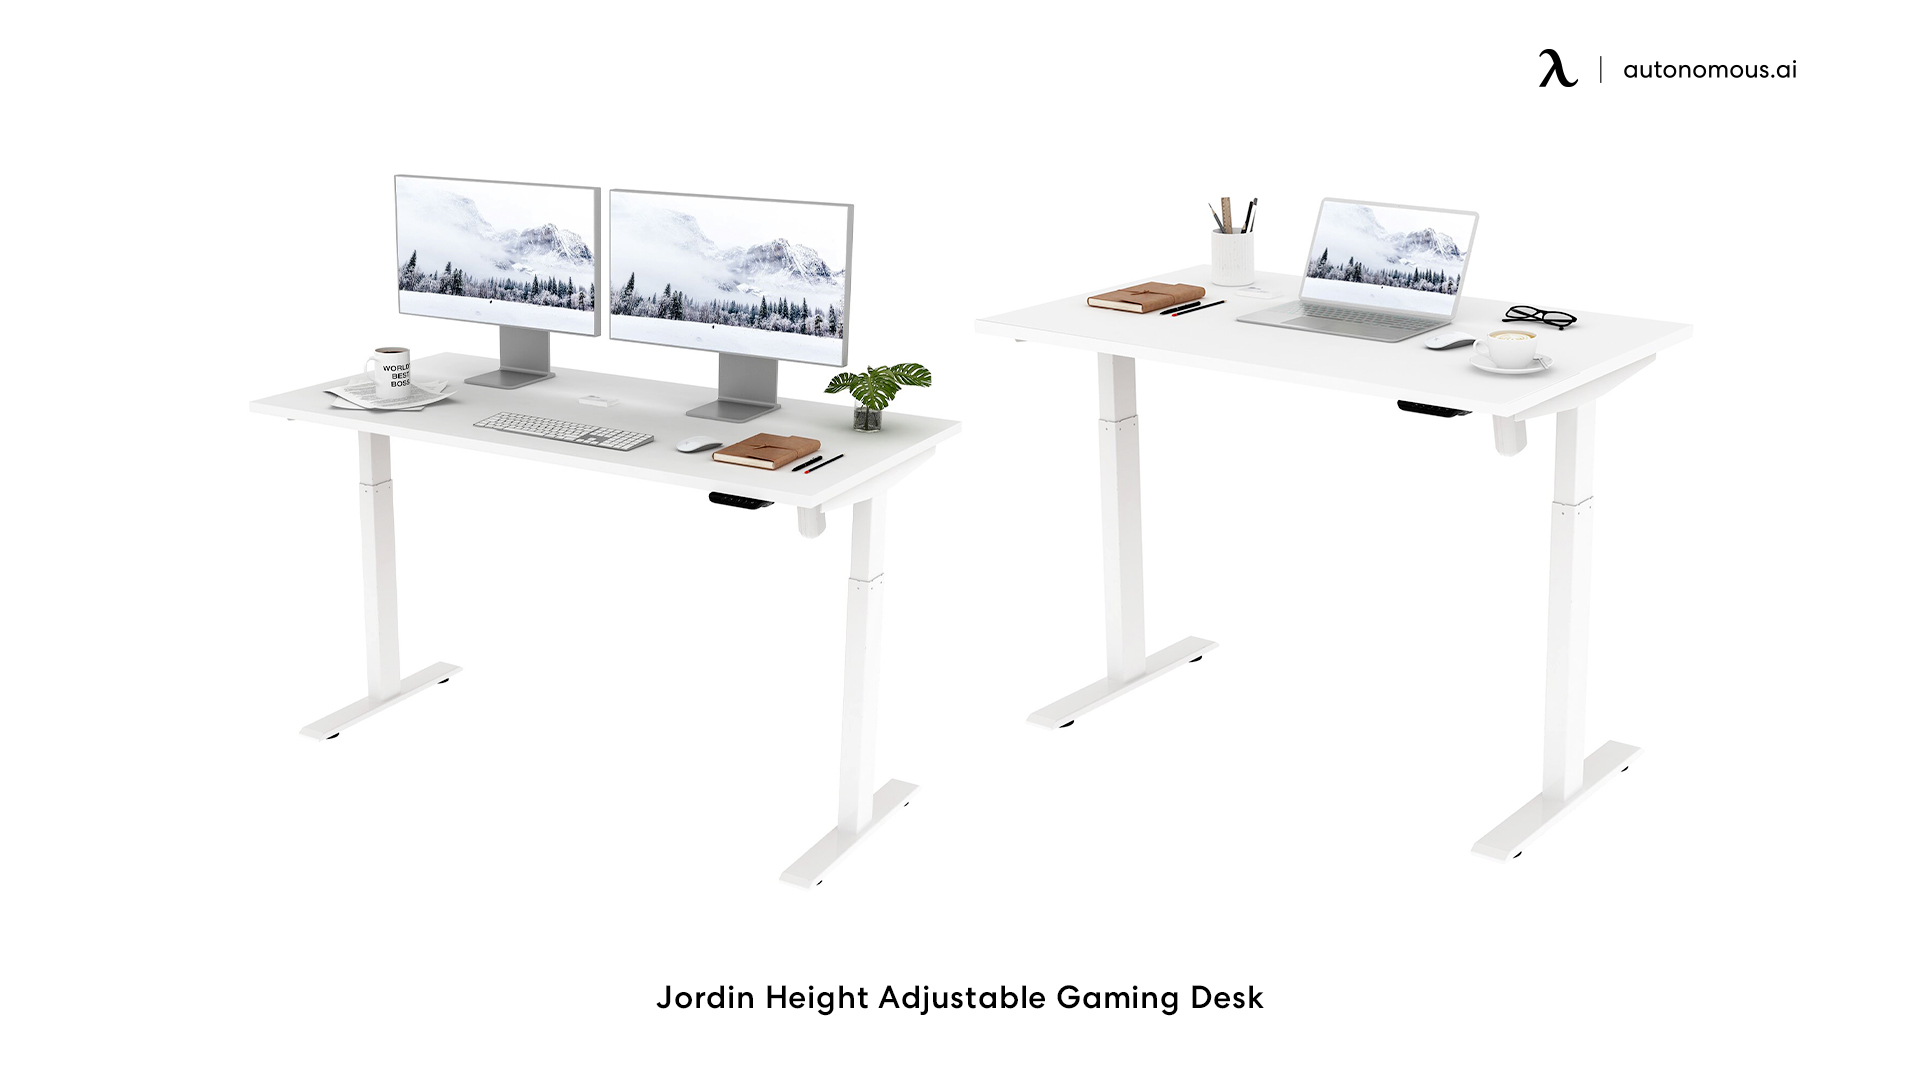 Jordin Height Adjustable Gaming Desk